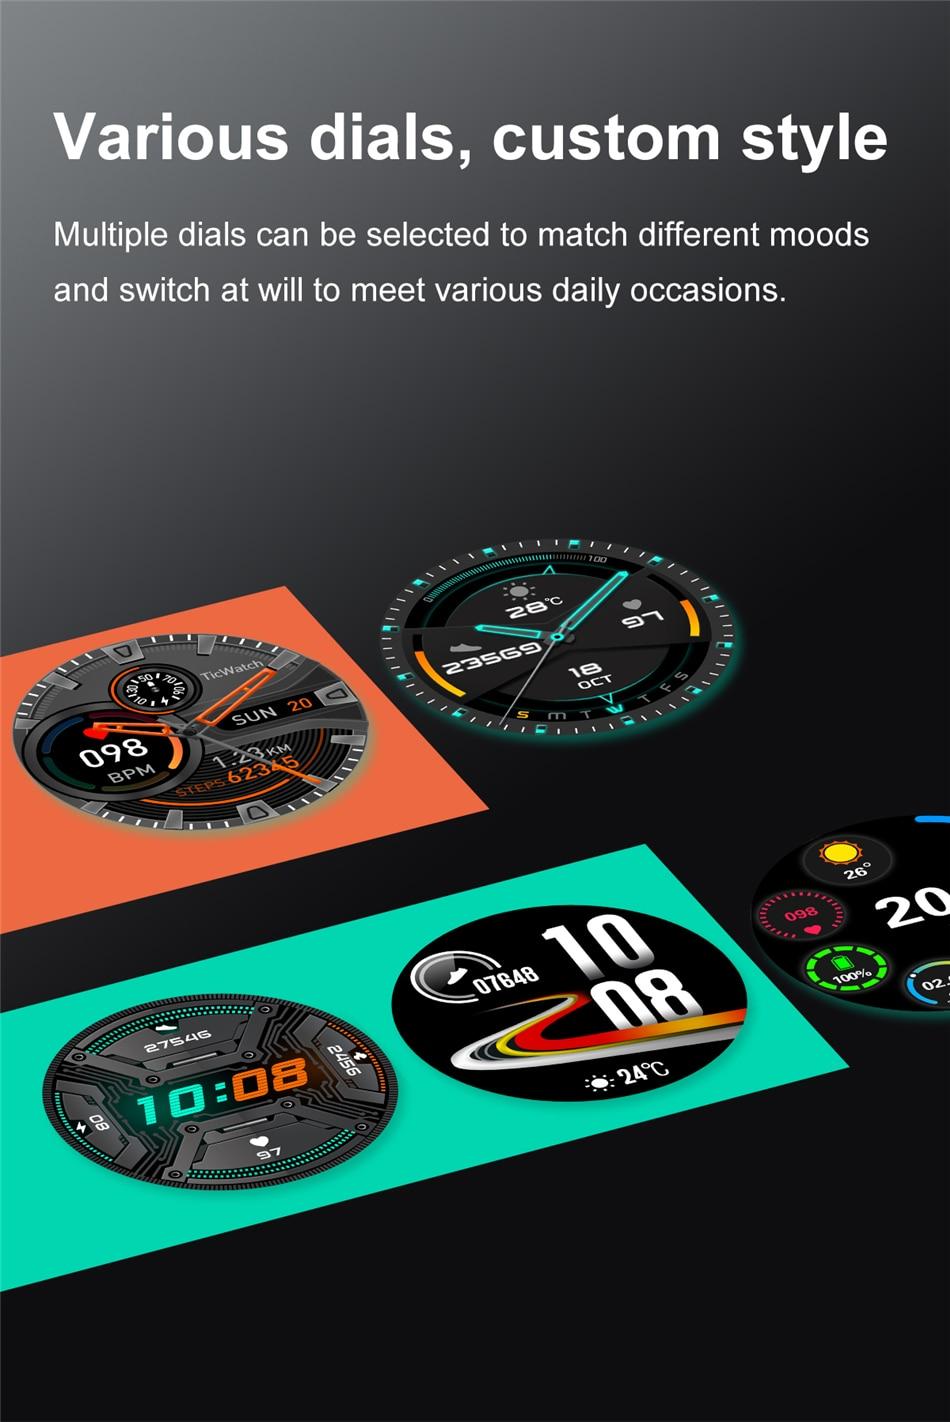 LIGE 2020 New Smart Watch Men Full Touch Screen Sport Fitness Watch IP68 Waterproof Bluetooth For Android ios smartwatch Men+box